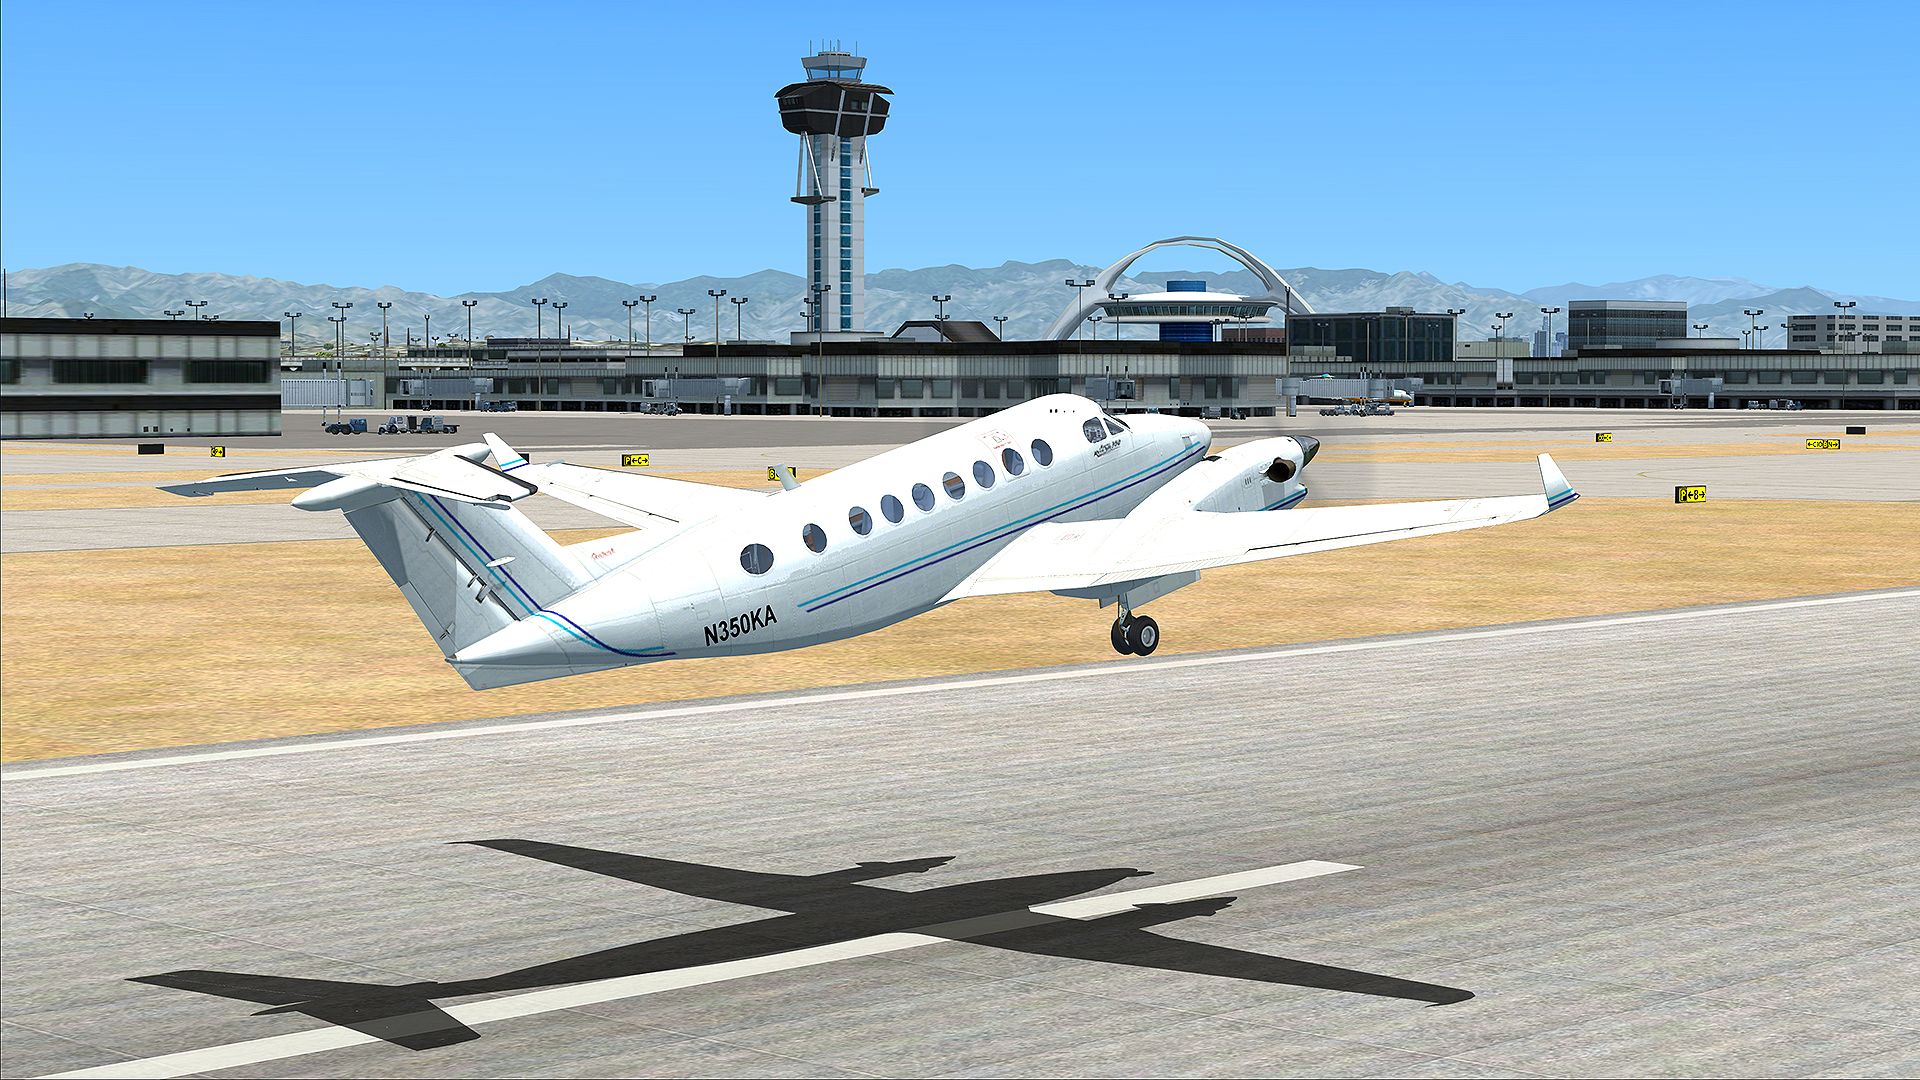 Microsoft Flight Simulator plane taking off from runway